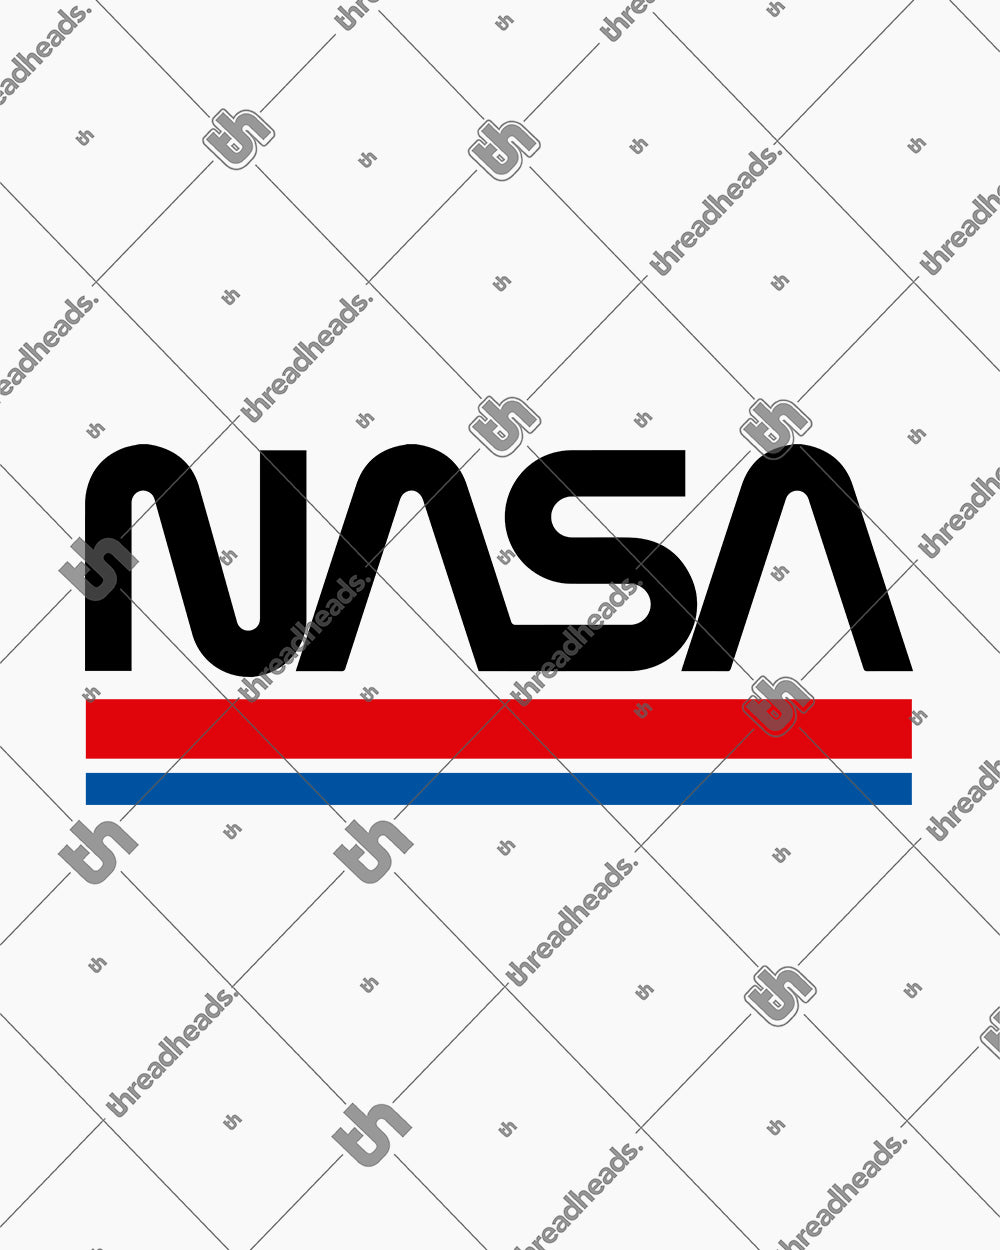 NASA Stripes Long Sleeve Australia Online #colour_white